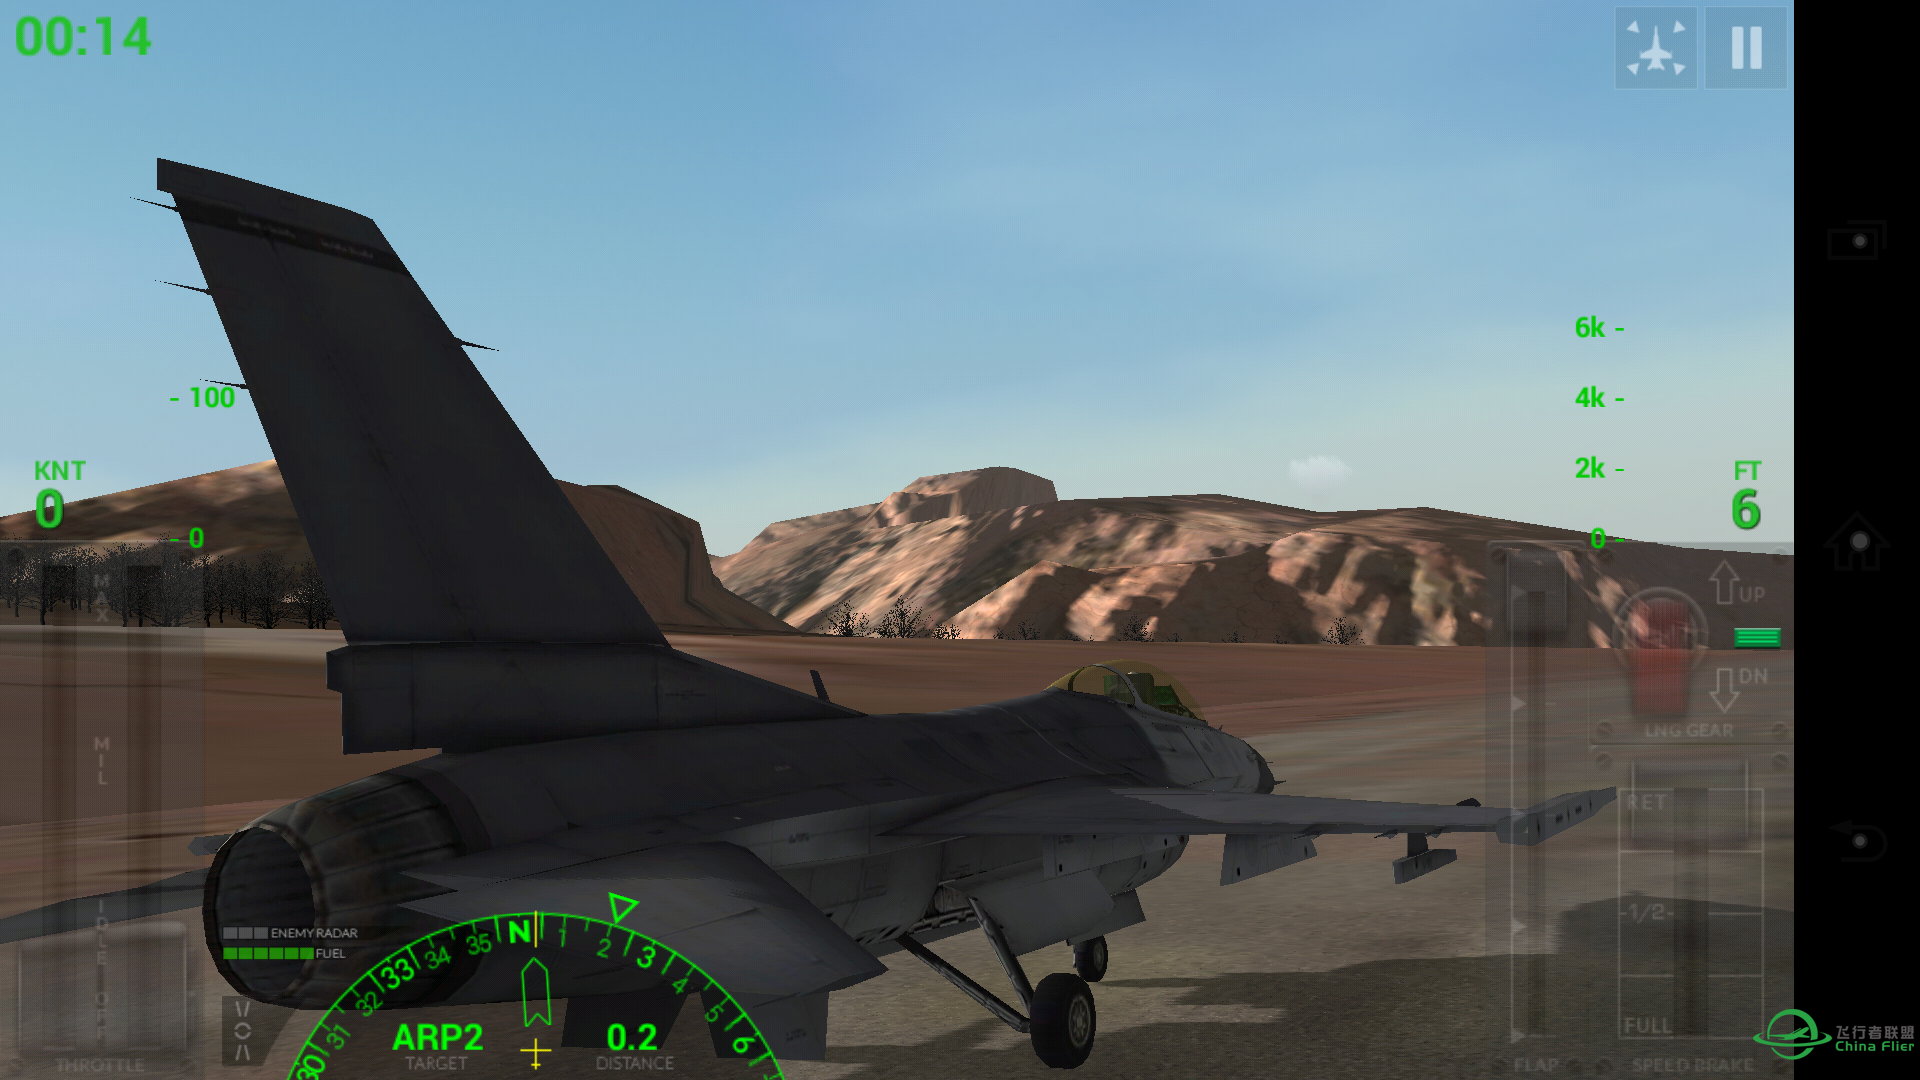 [截图而已]F18 Carrier Landing2 Pro-9349 